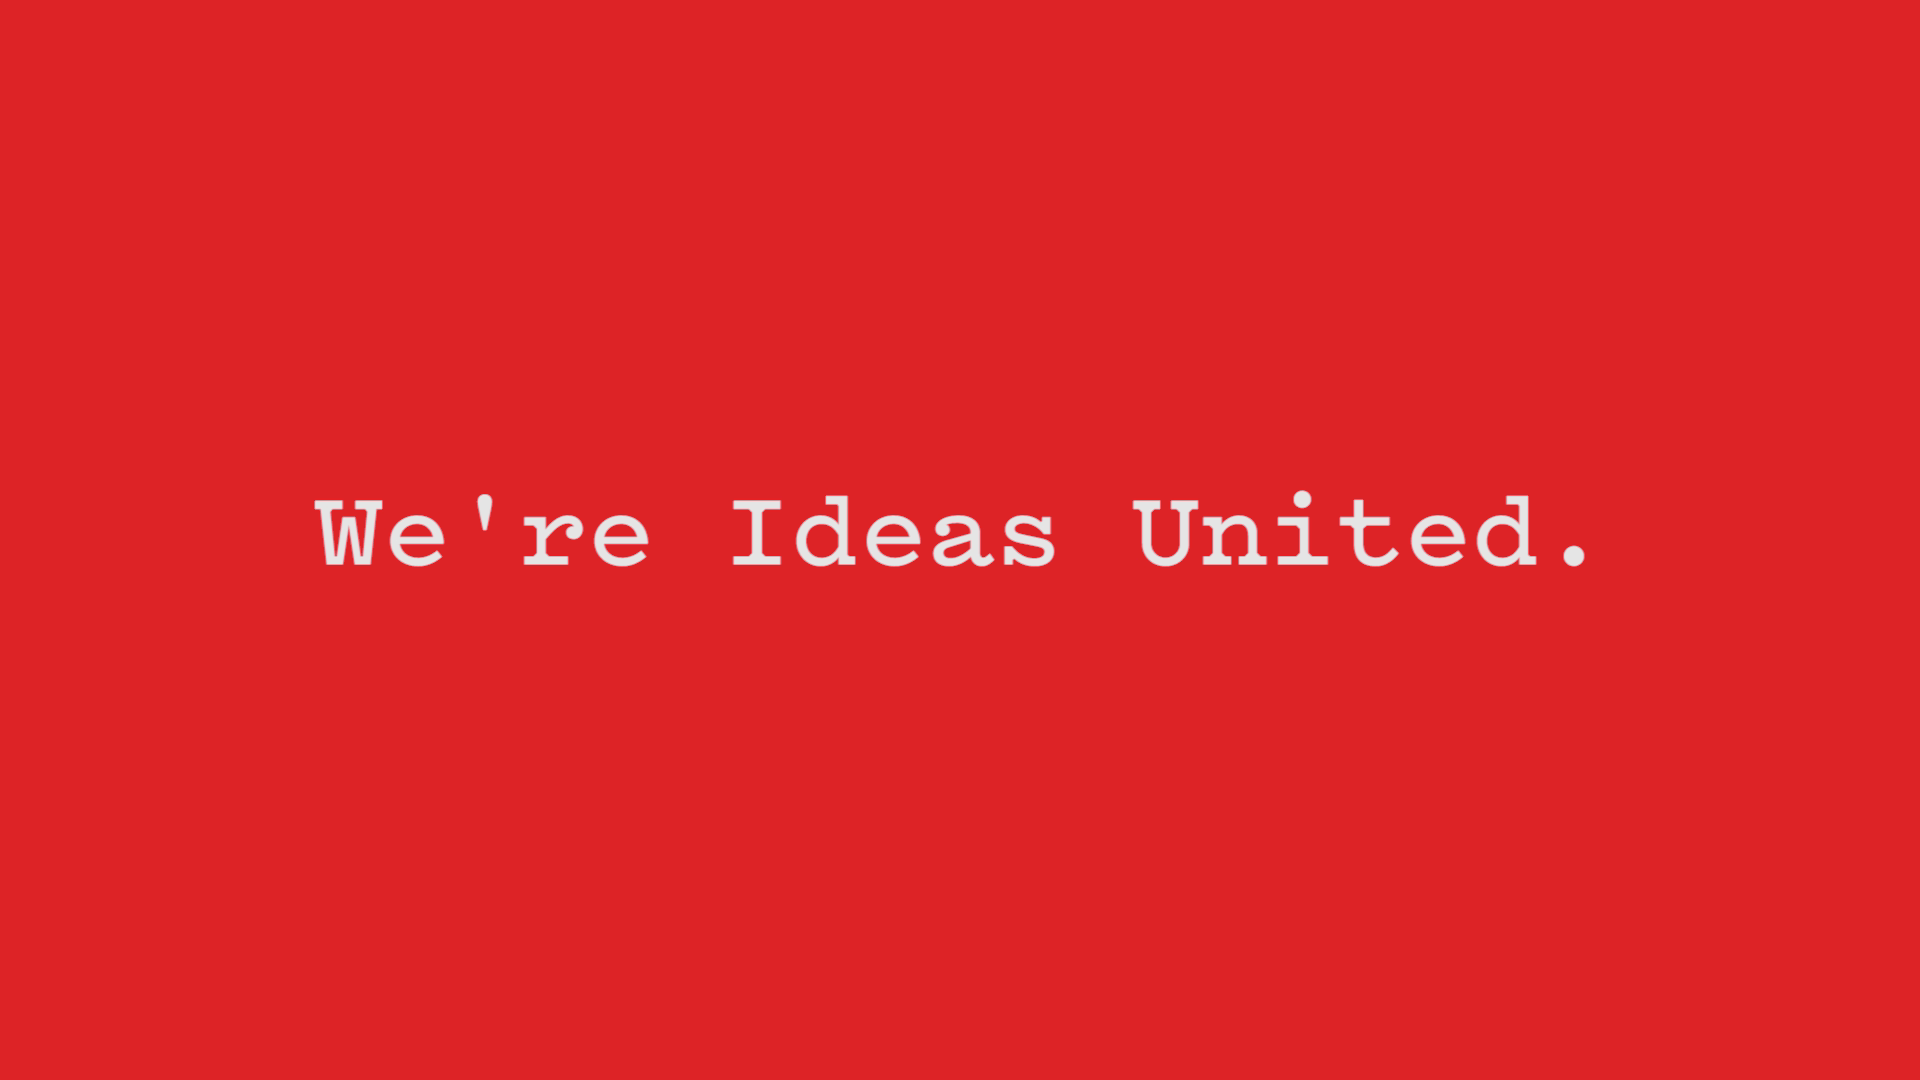 We Are Ideas United